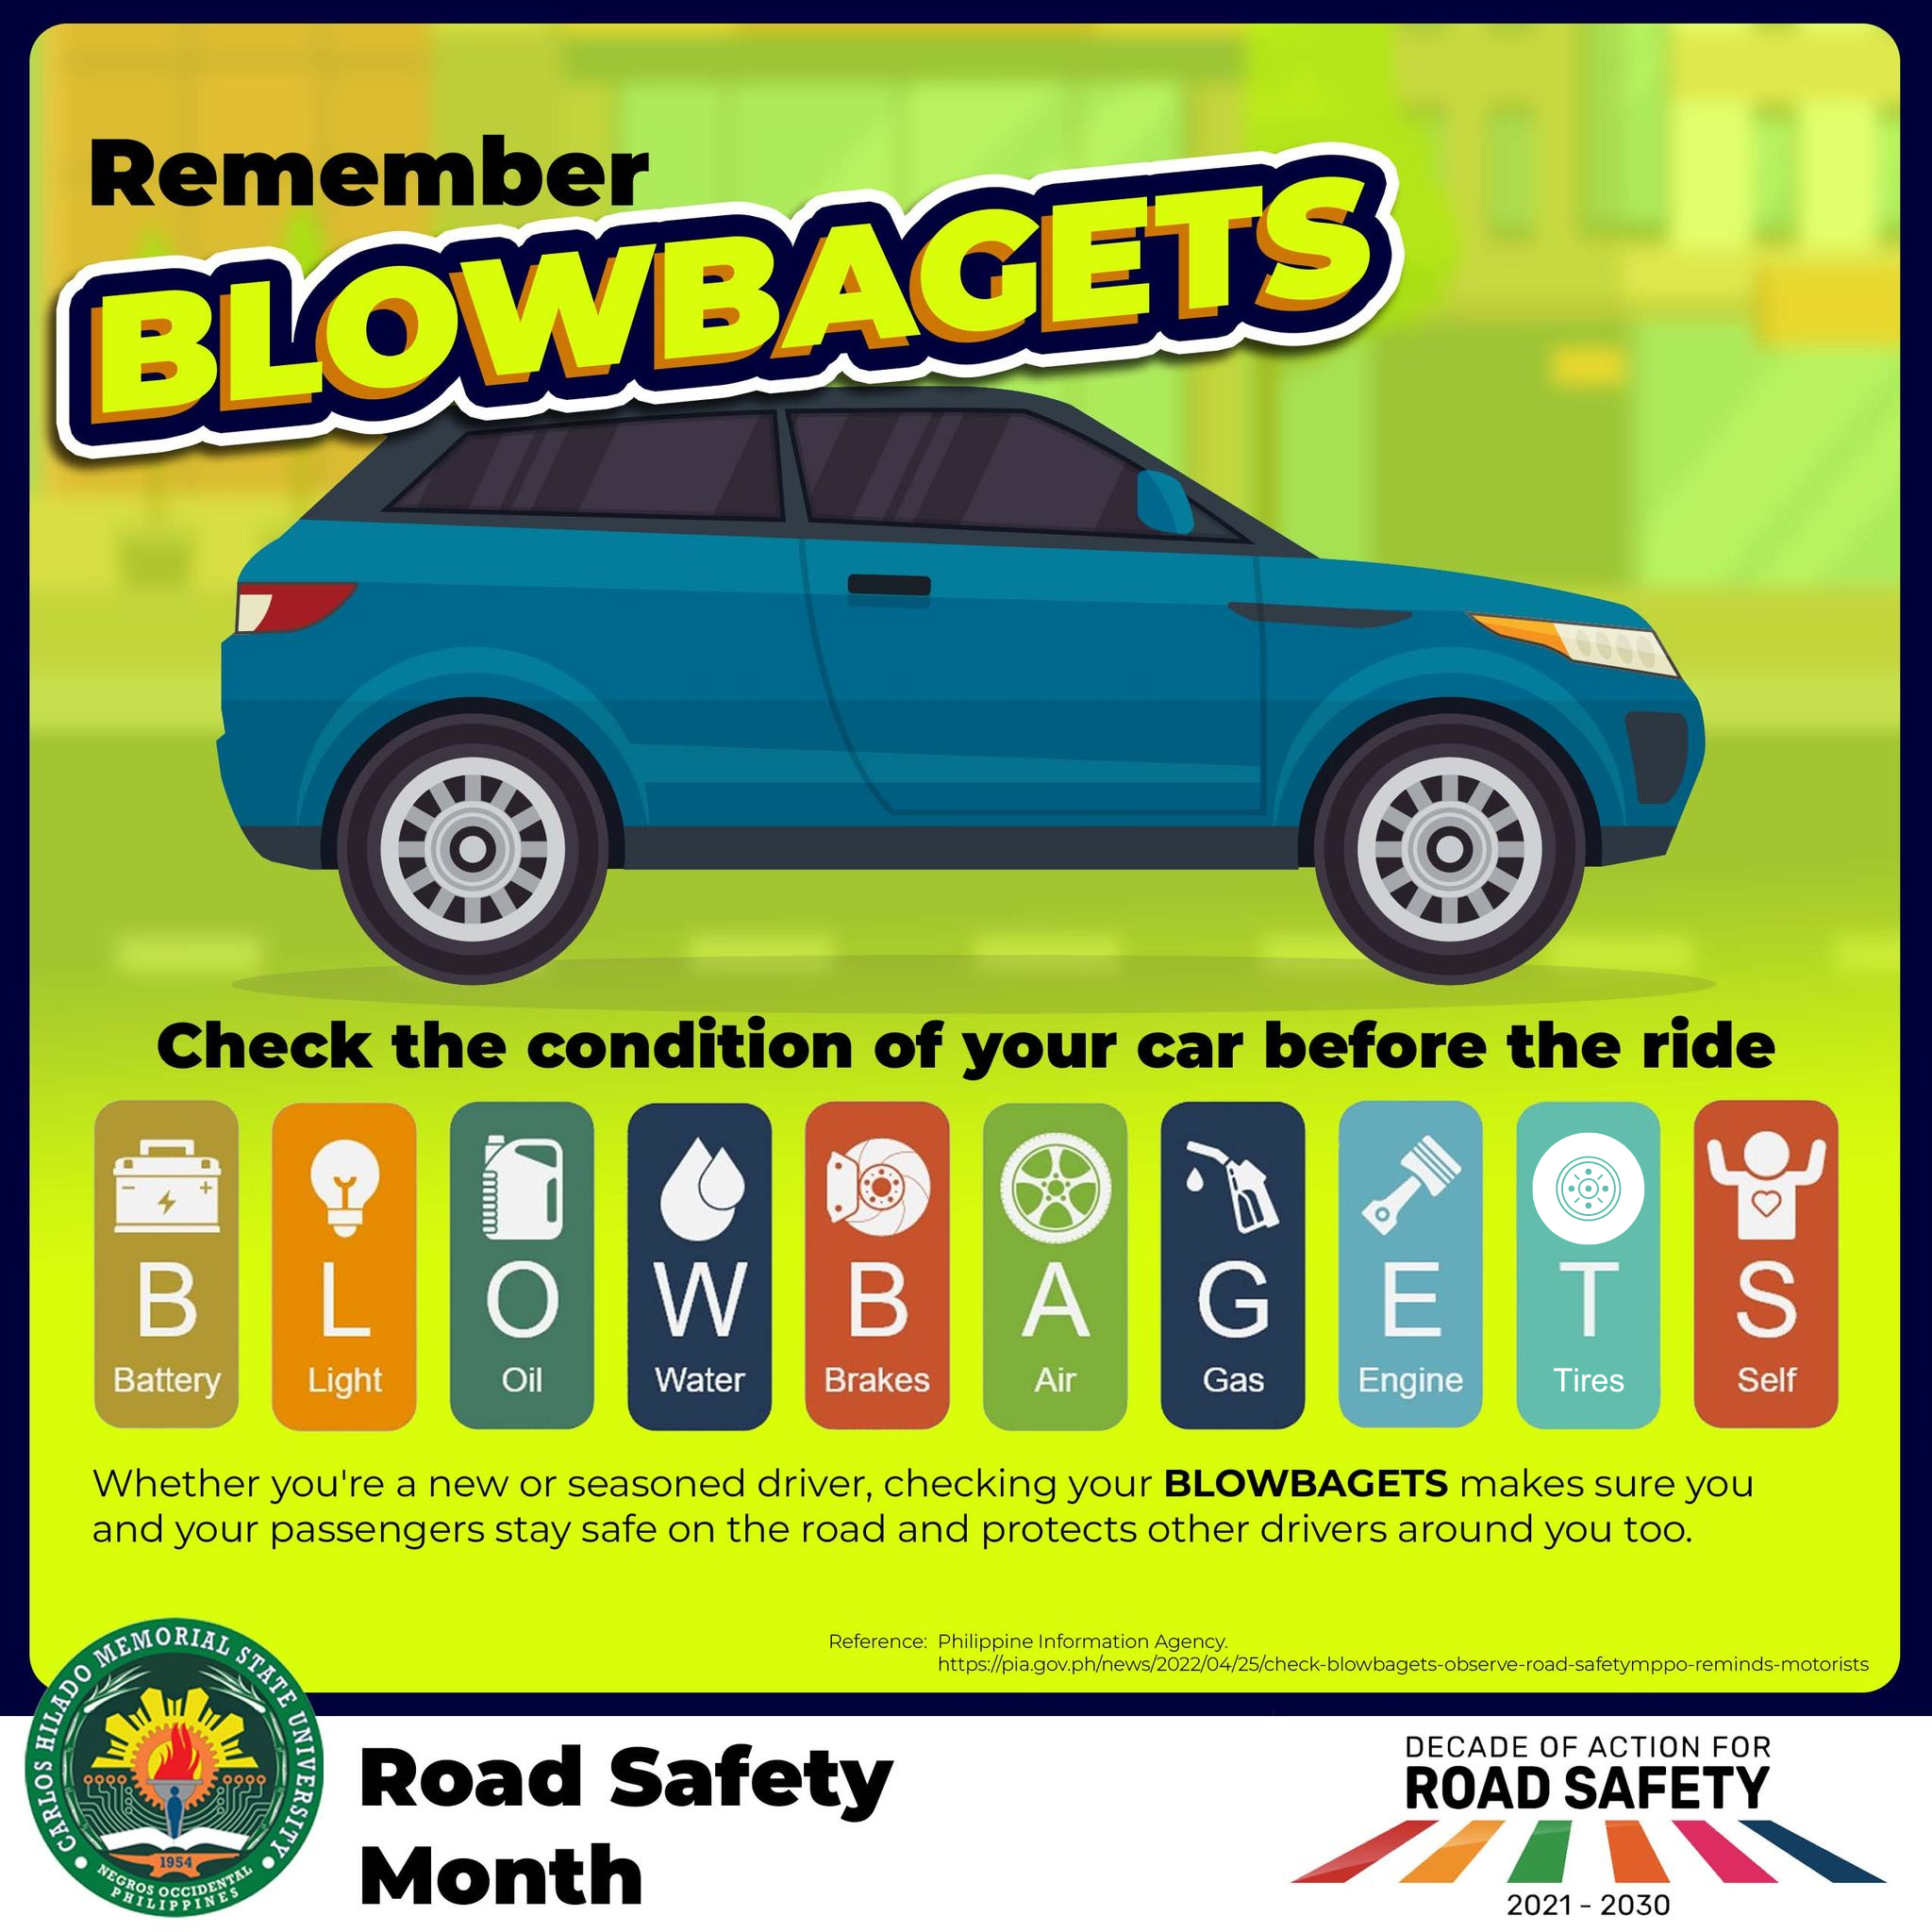 Road Safety Basics: BLOWBAGETS - Carlos Hilado Memorial State University